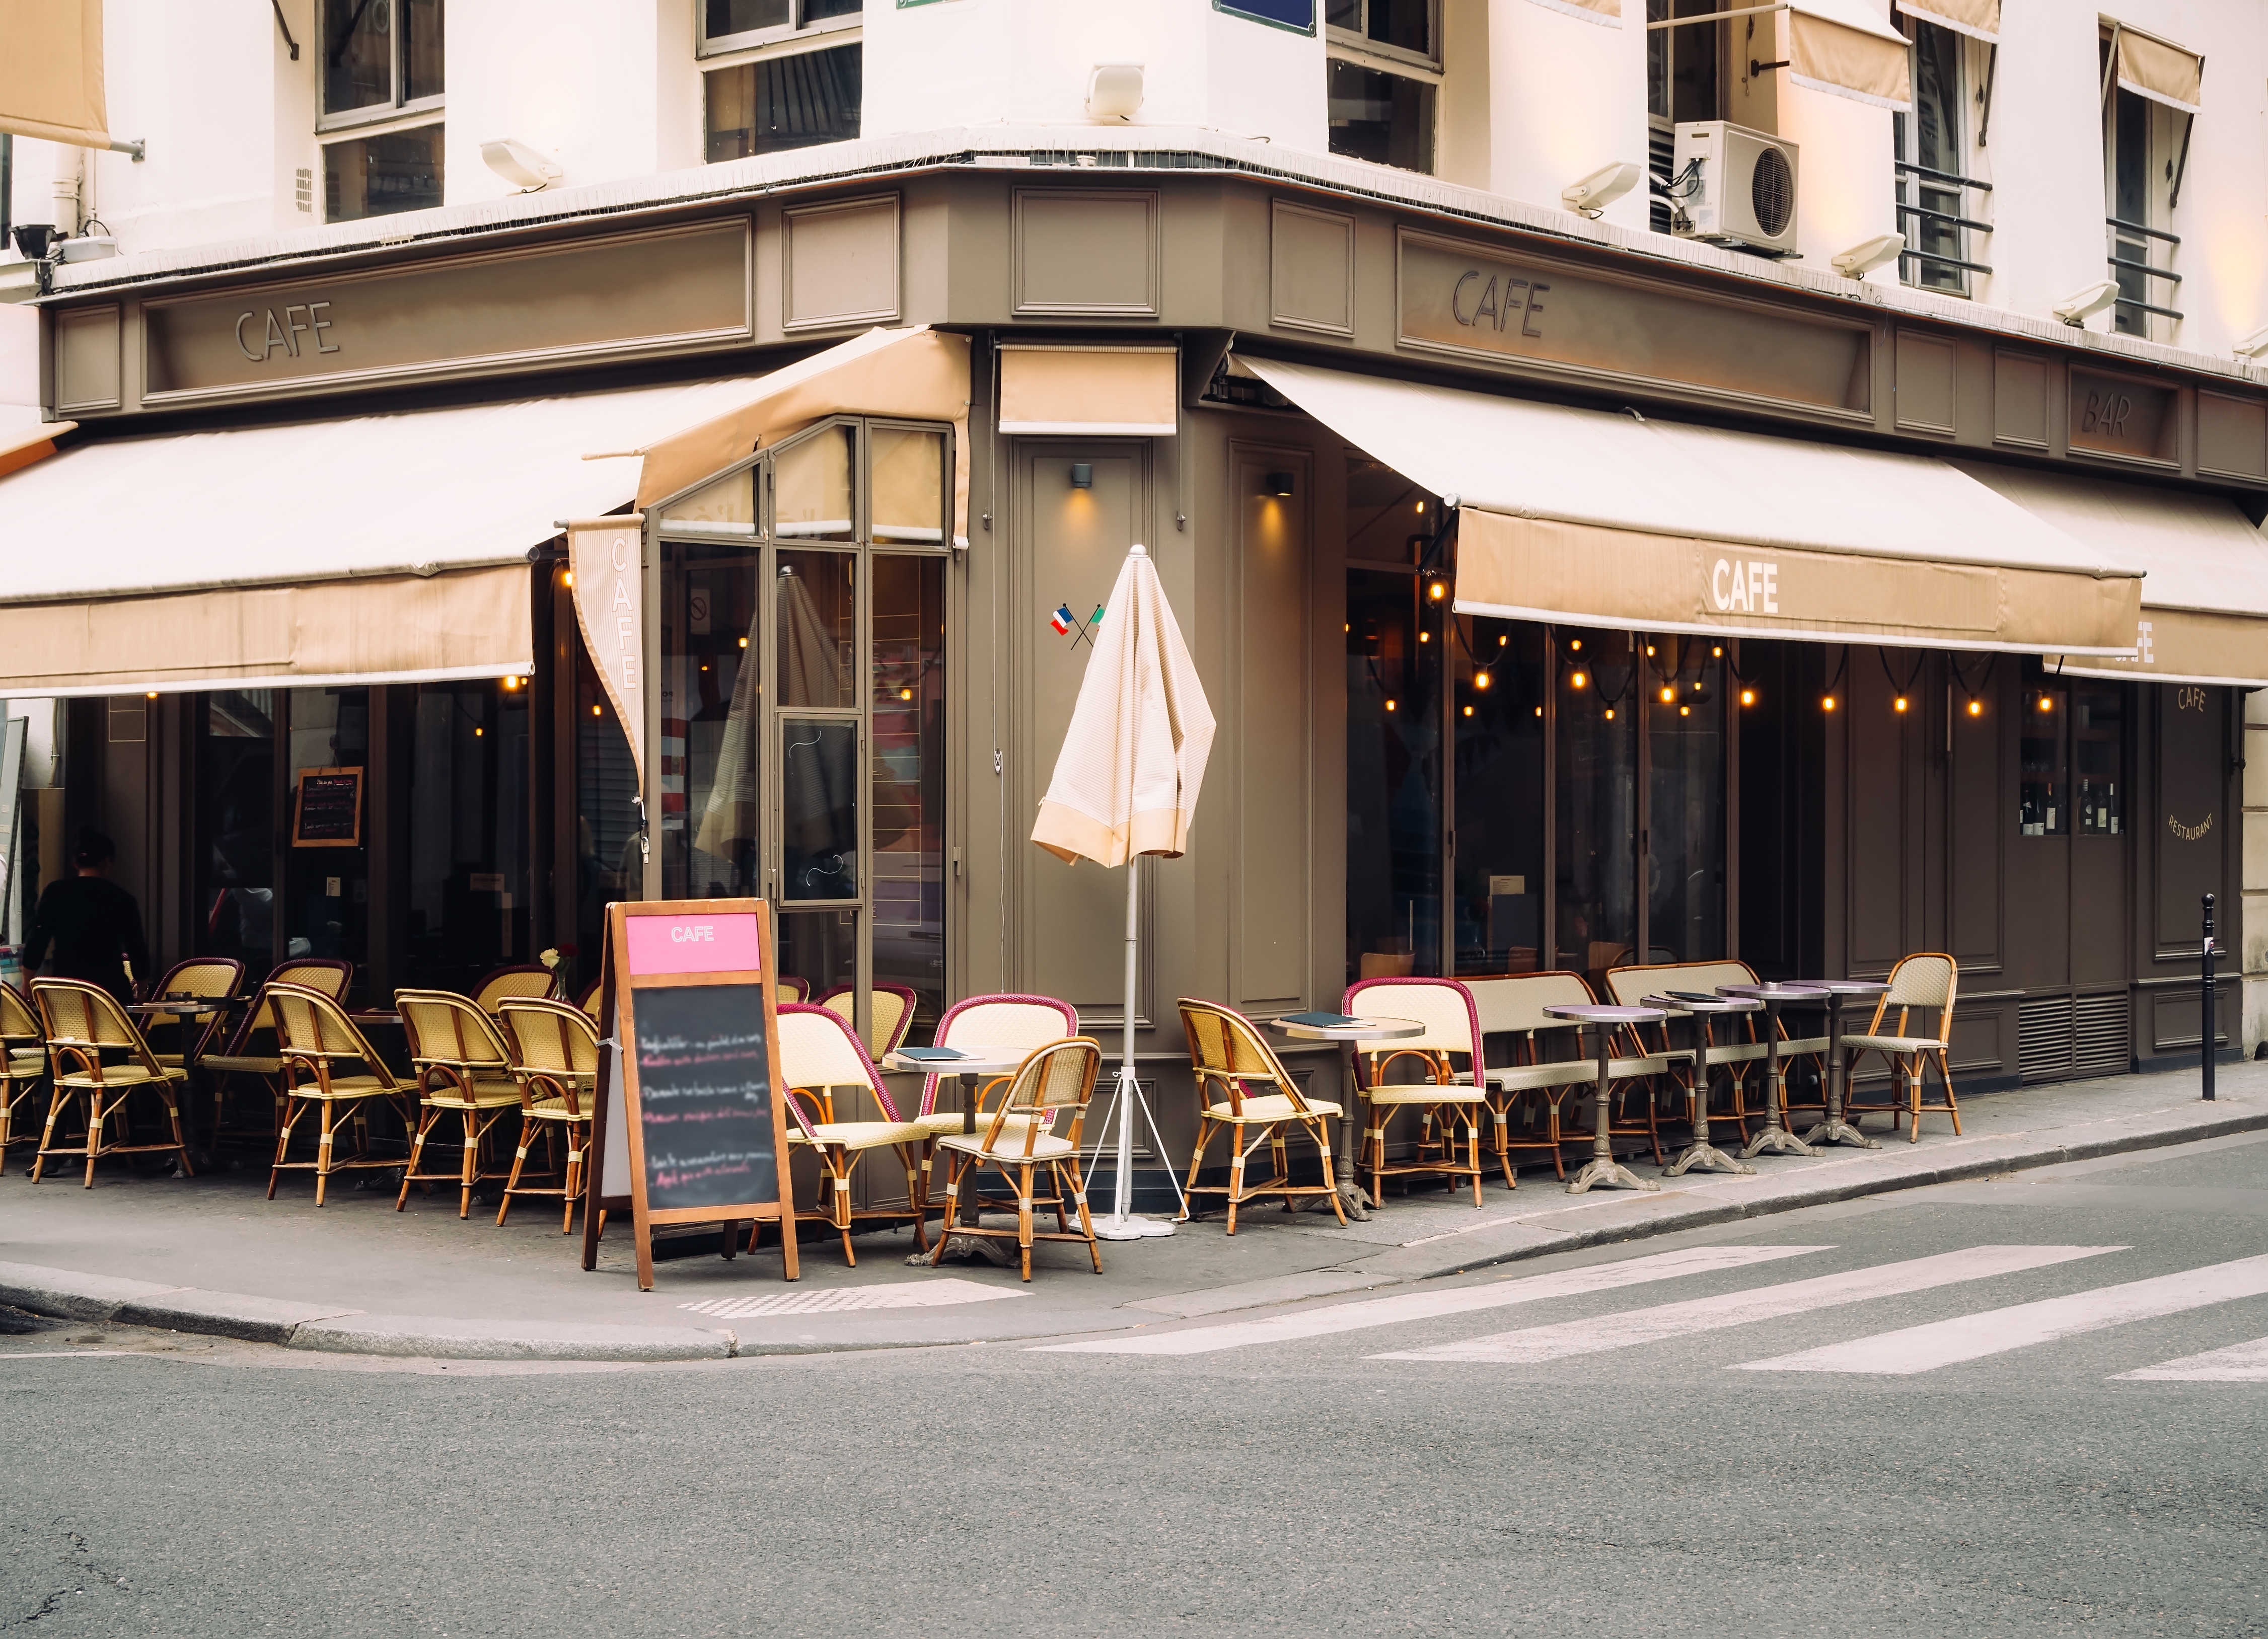 Acogedora calle con mesas de cafetería | Fuente: Shutterstock